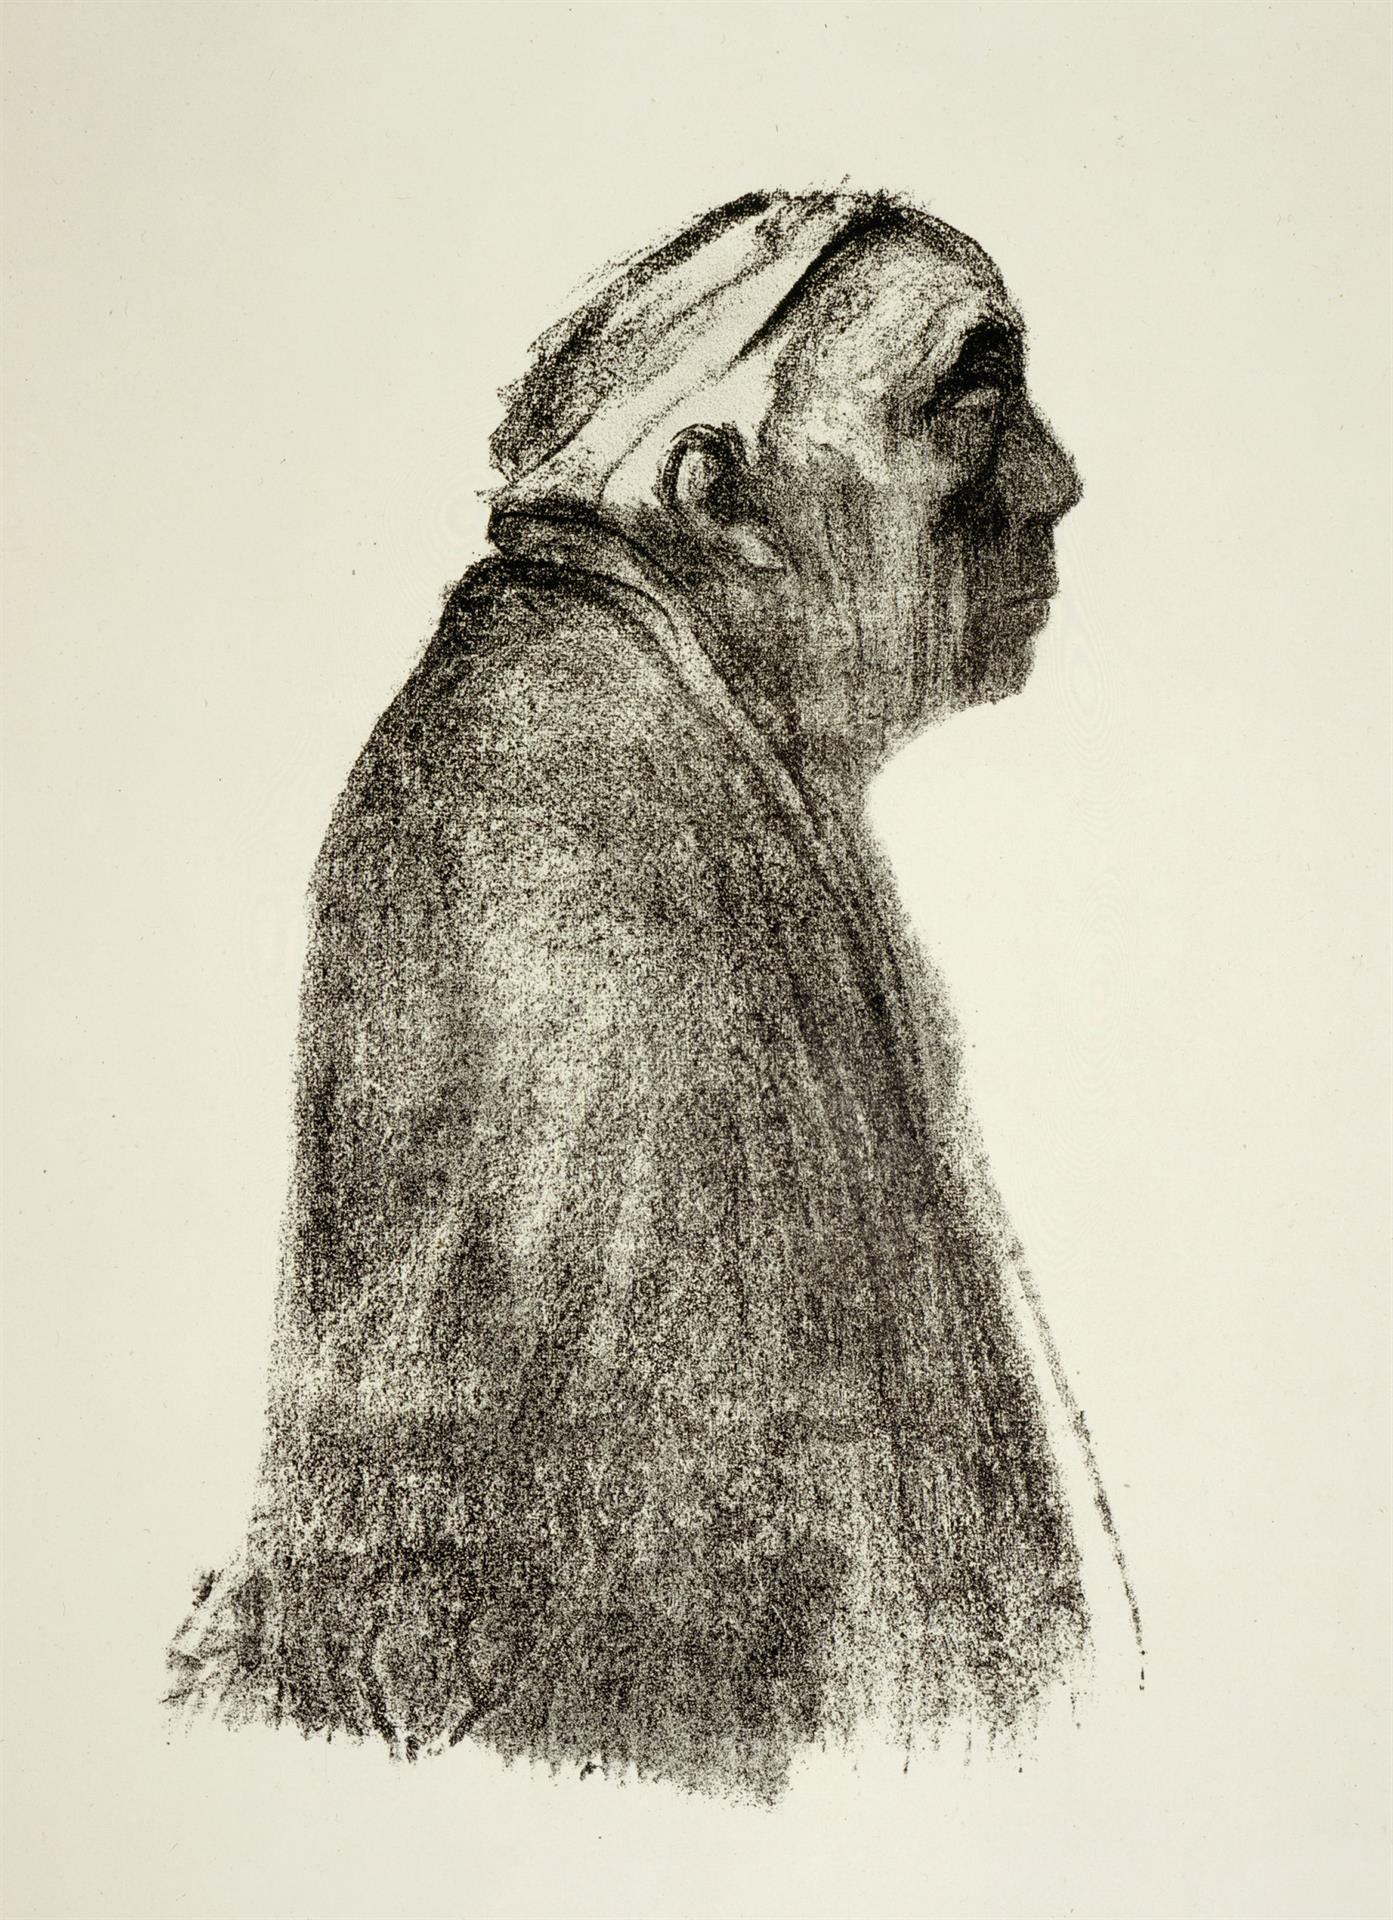 Käthe Kollwitz, Self-portrait in profile towards right, 1938?, crayon lithograph (transfer), Kn 273 III, Cologne Kollwitz Collection © Käthe Kollwitz Museum Köln